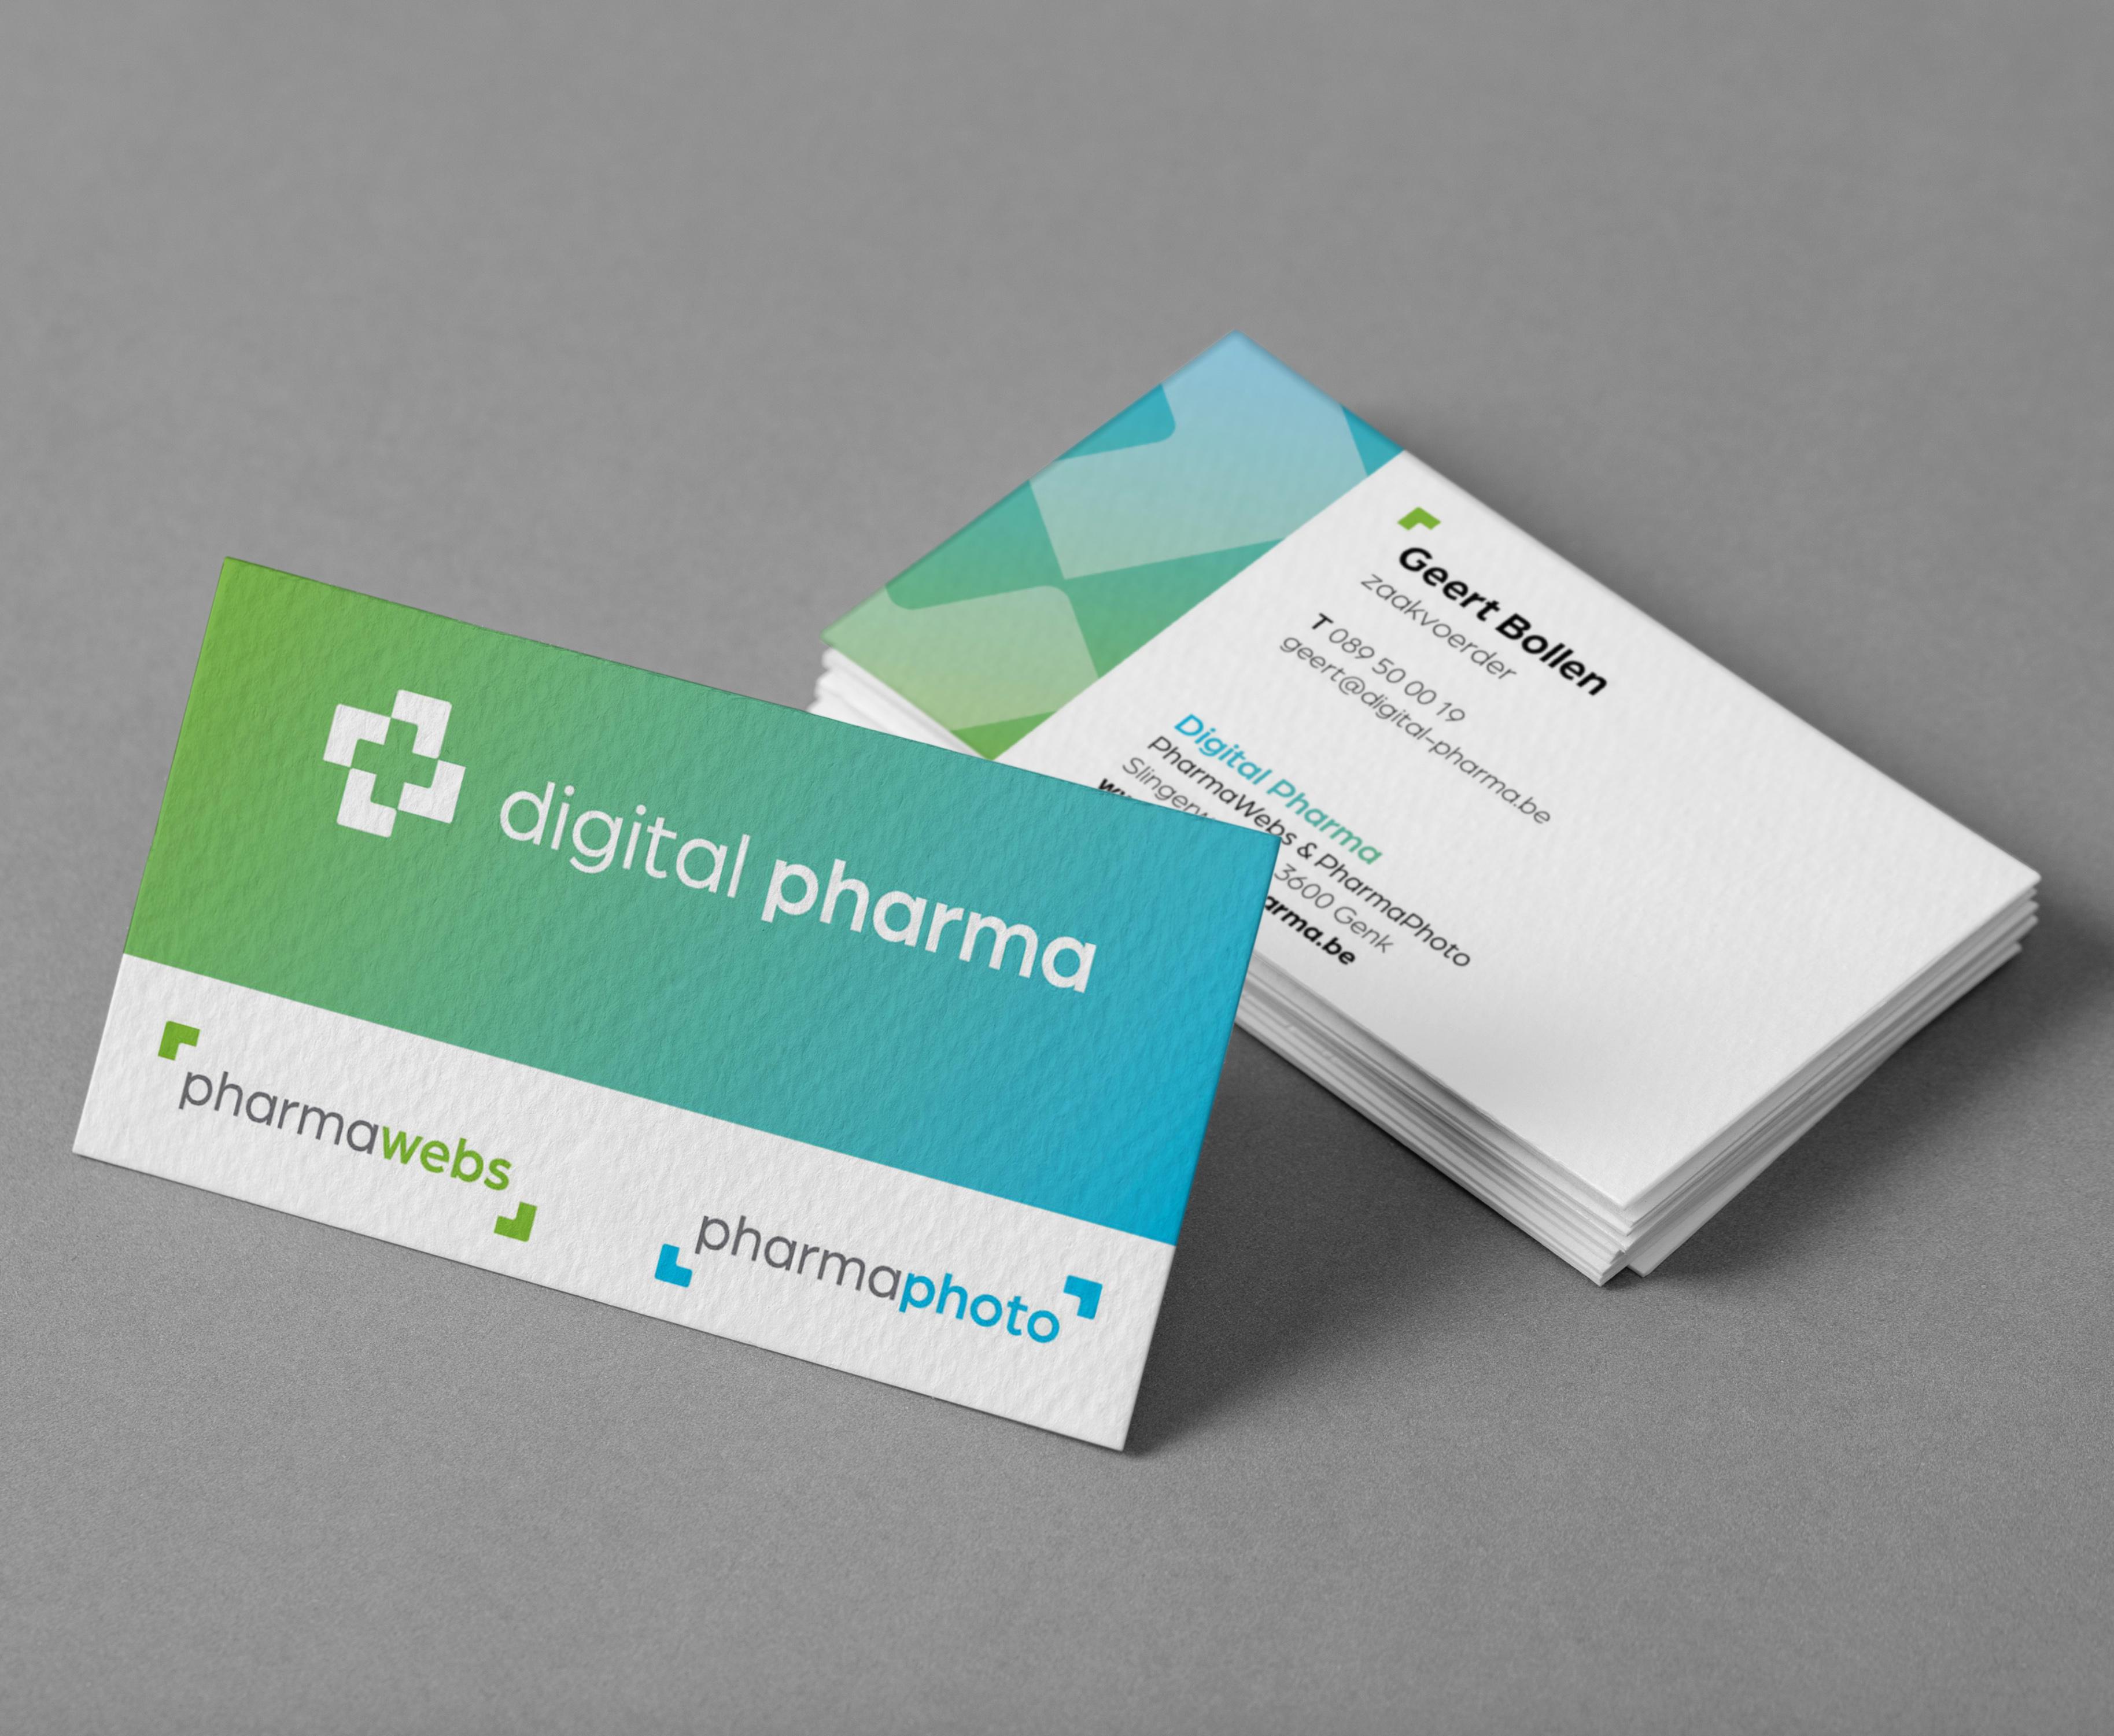 Naamkaartje voor Digital Pharma